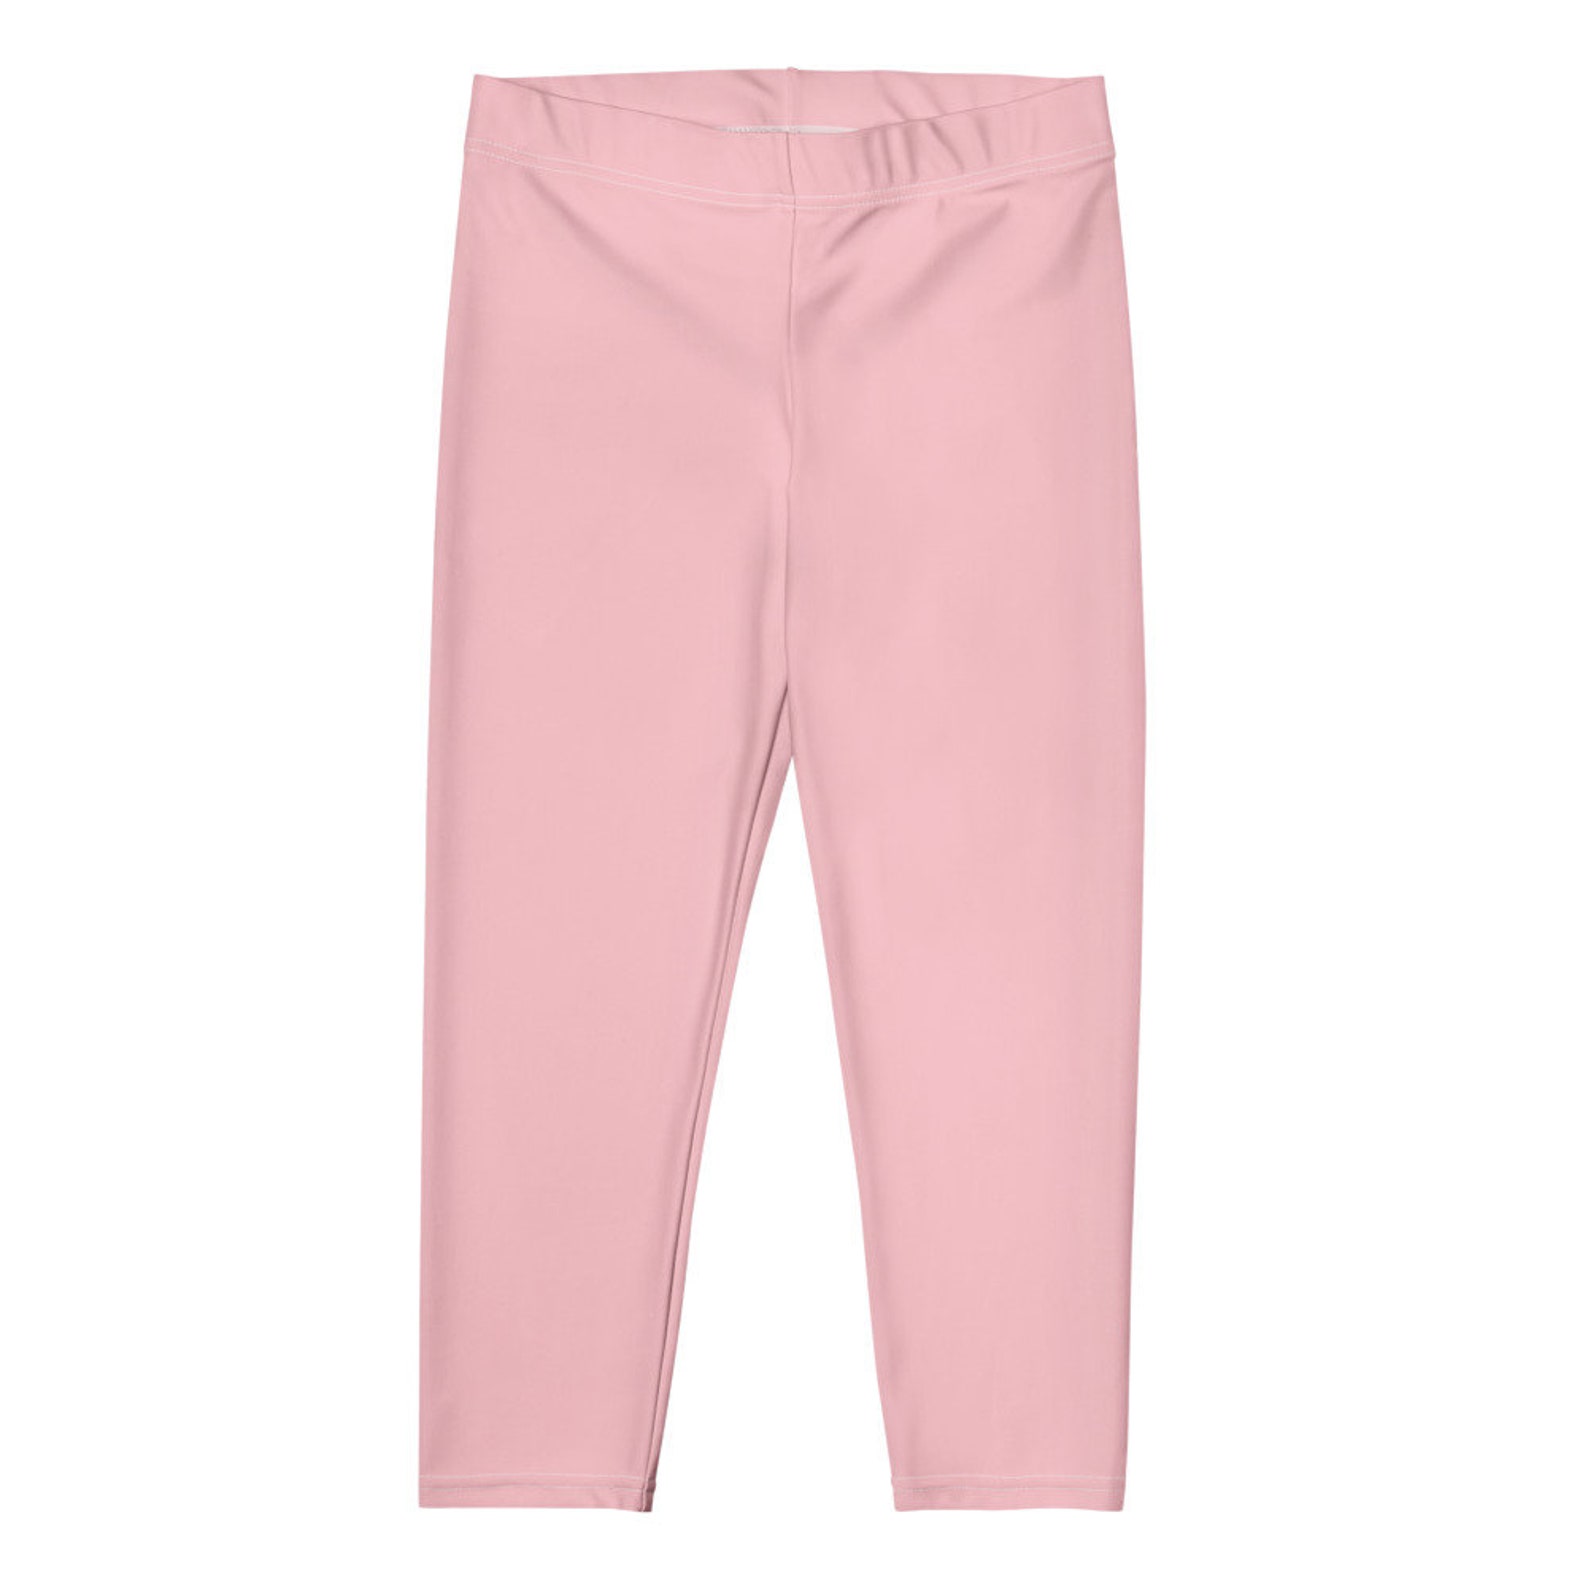 Pastel Pink Capri Leggings Yoga Sports Activewear | Etsy